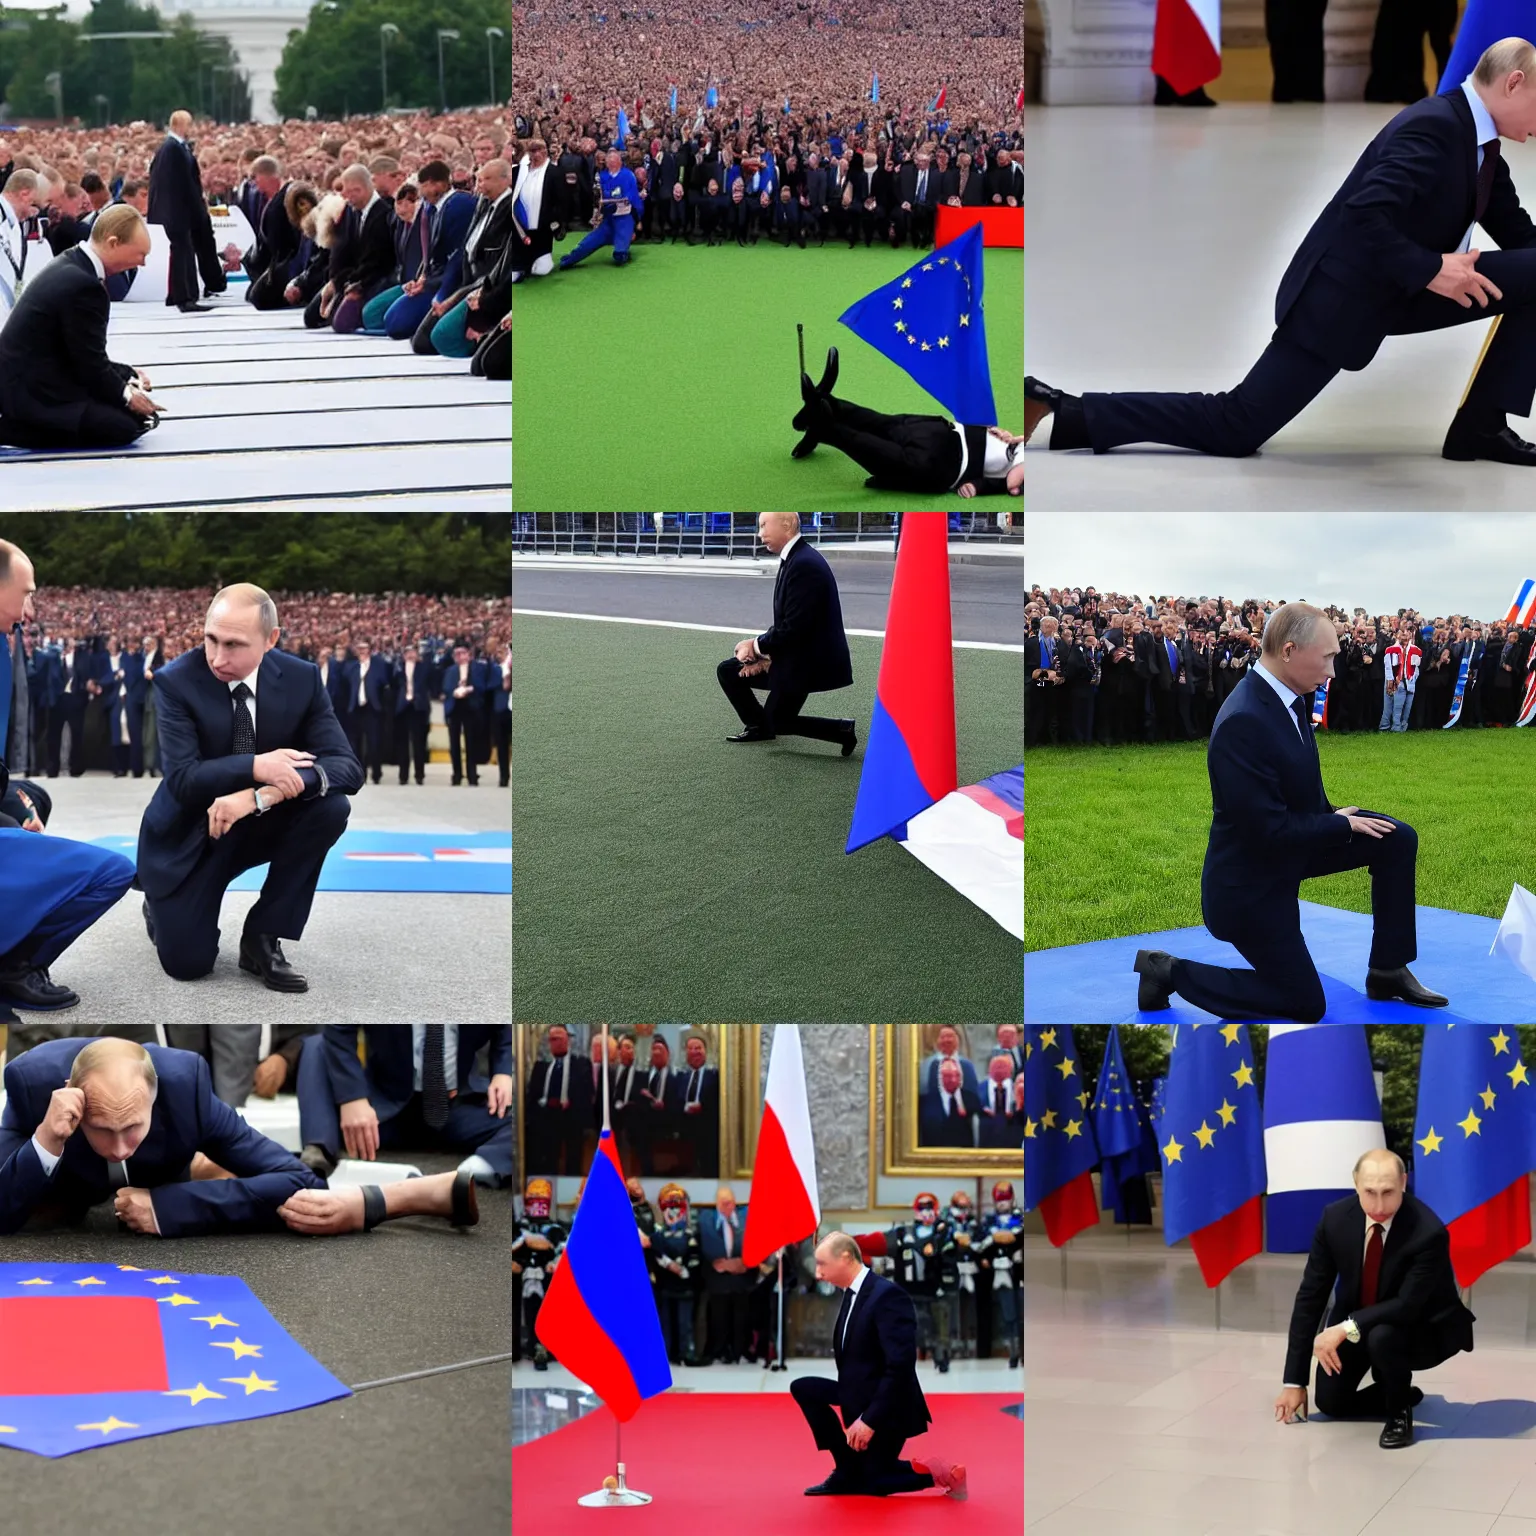 Prompt: vladimir putin kneeling to the EU flag